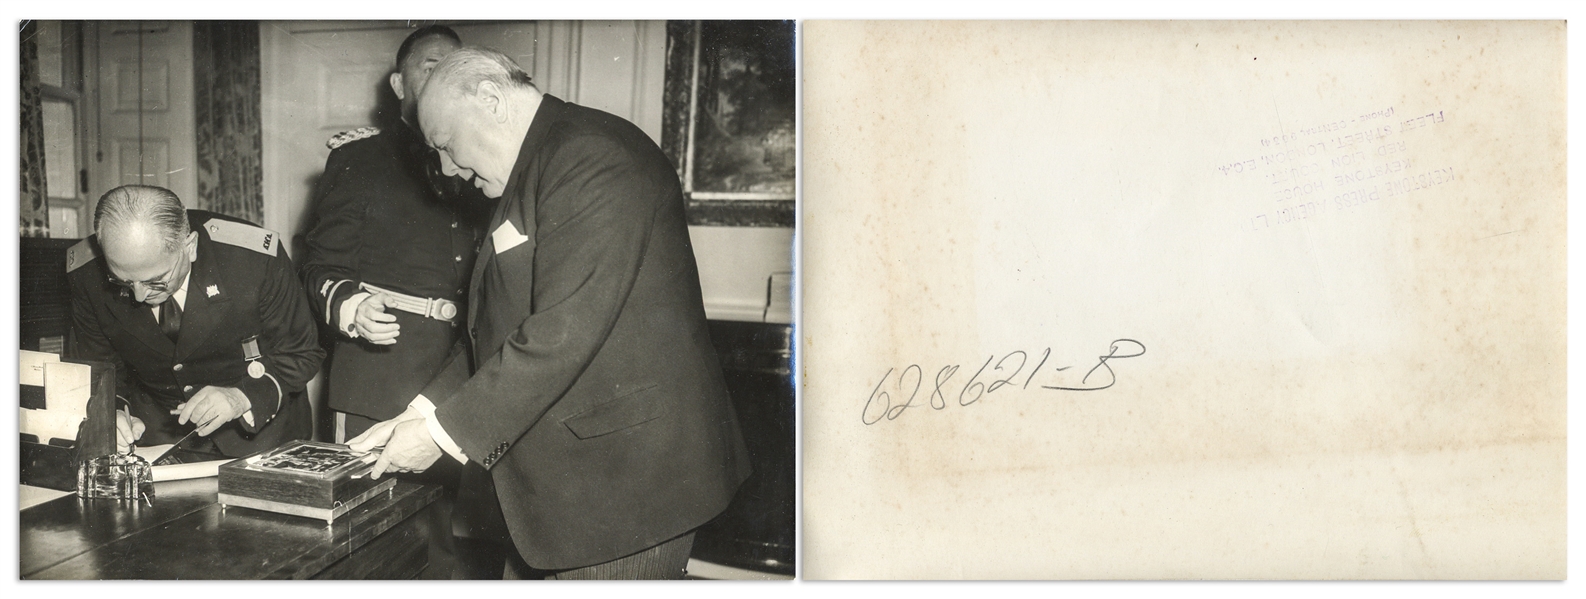 Winston Churchill Lot of Press Photos Showing Churchill Receiving a Humidor